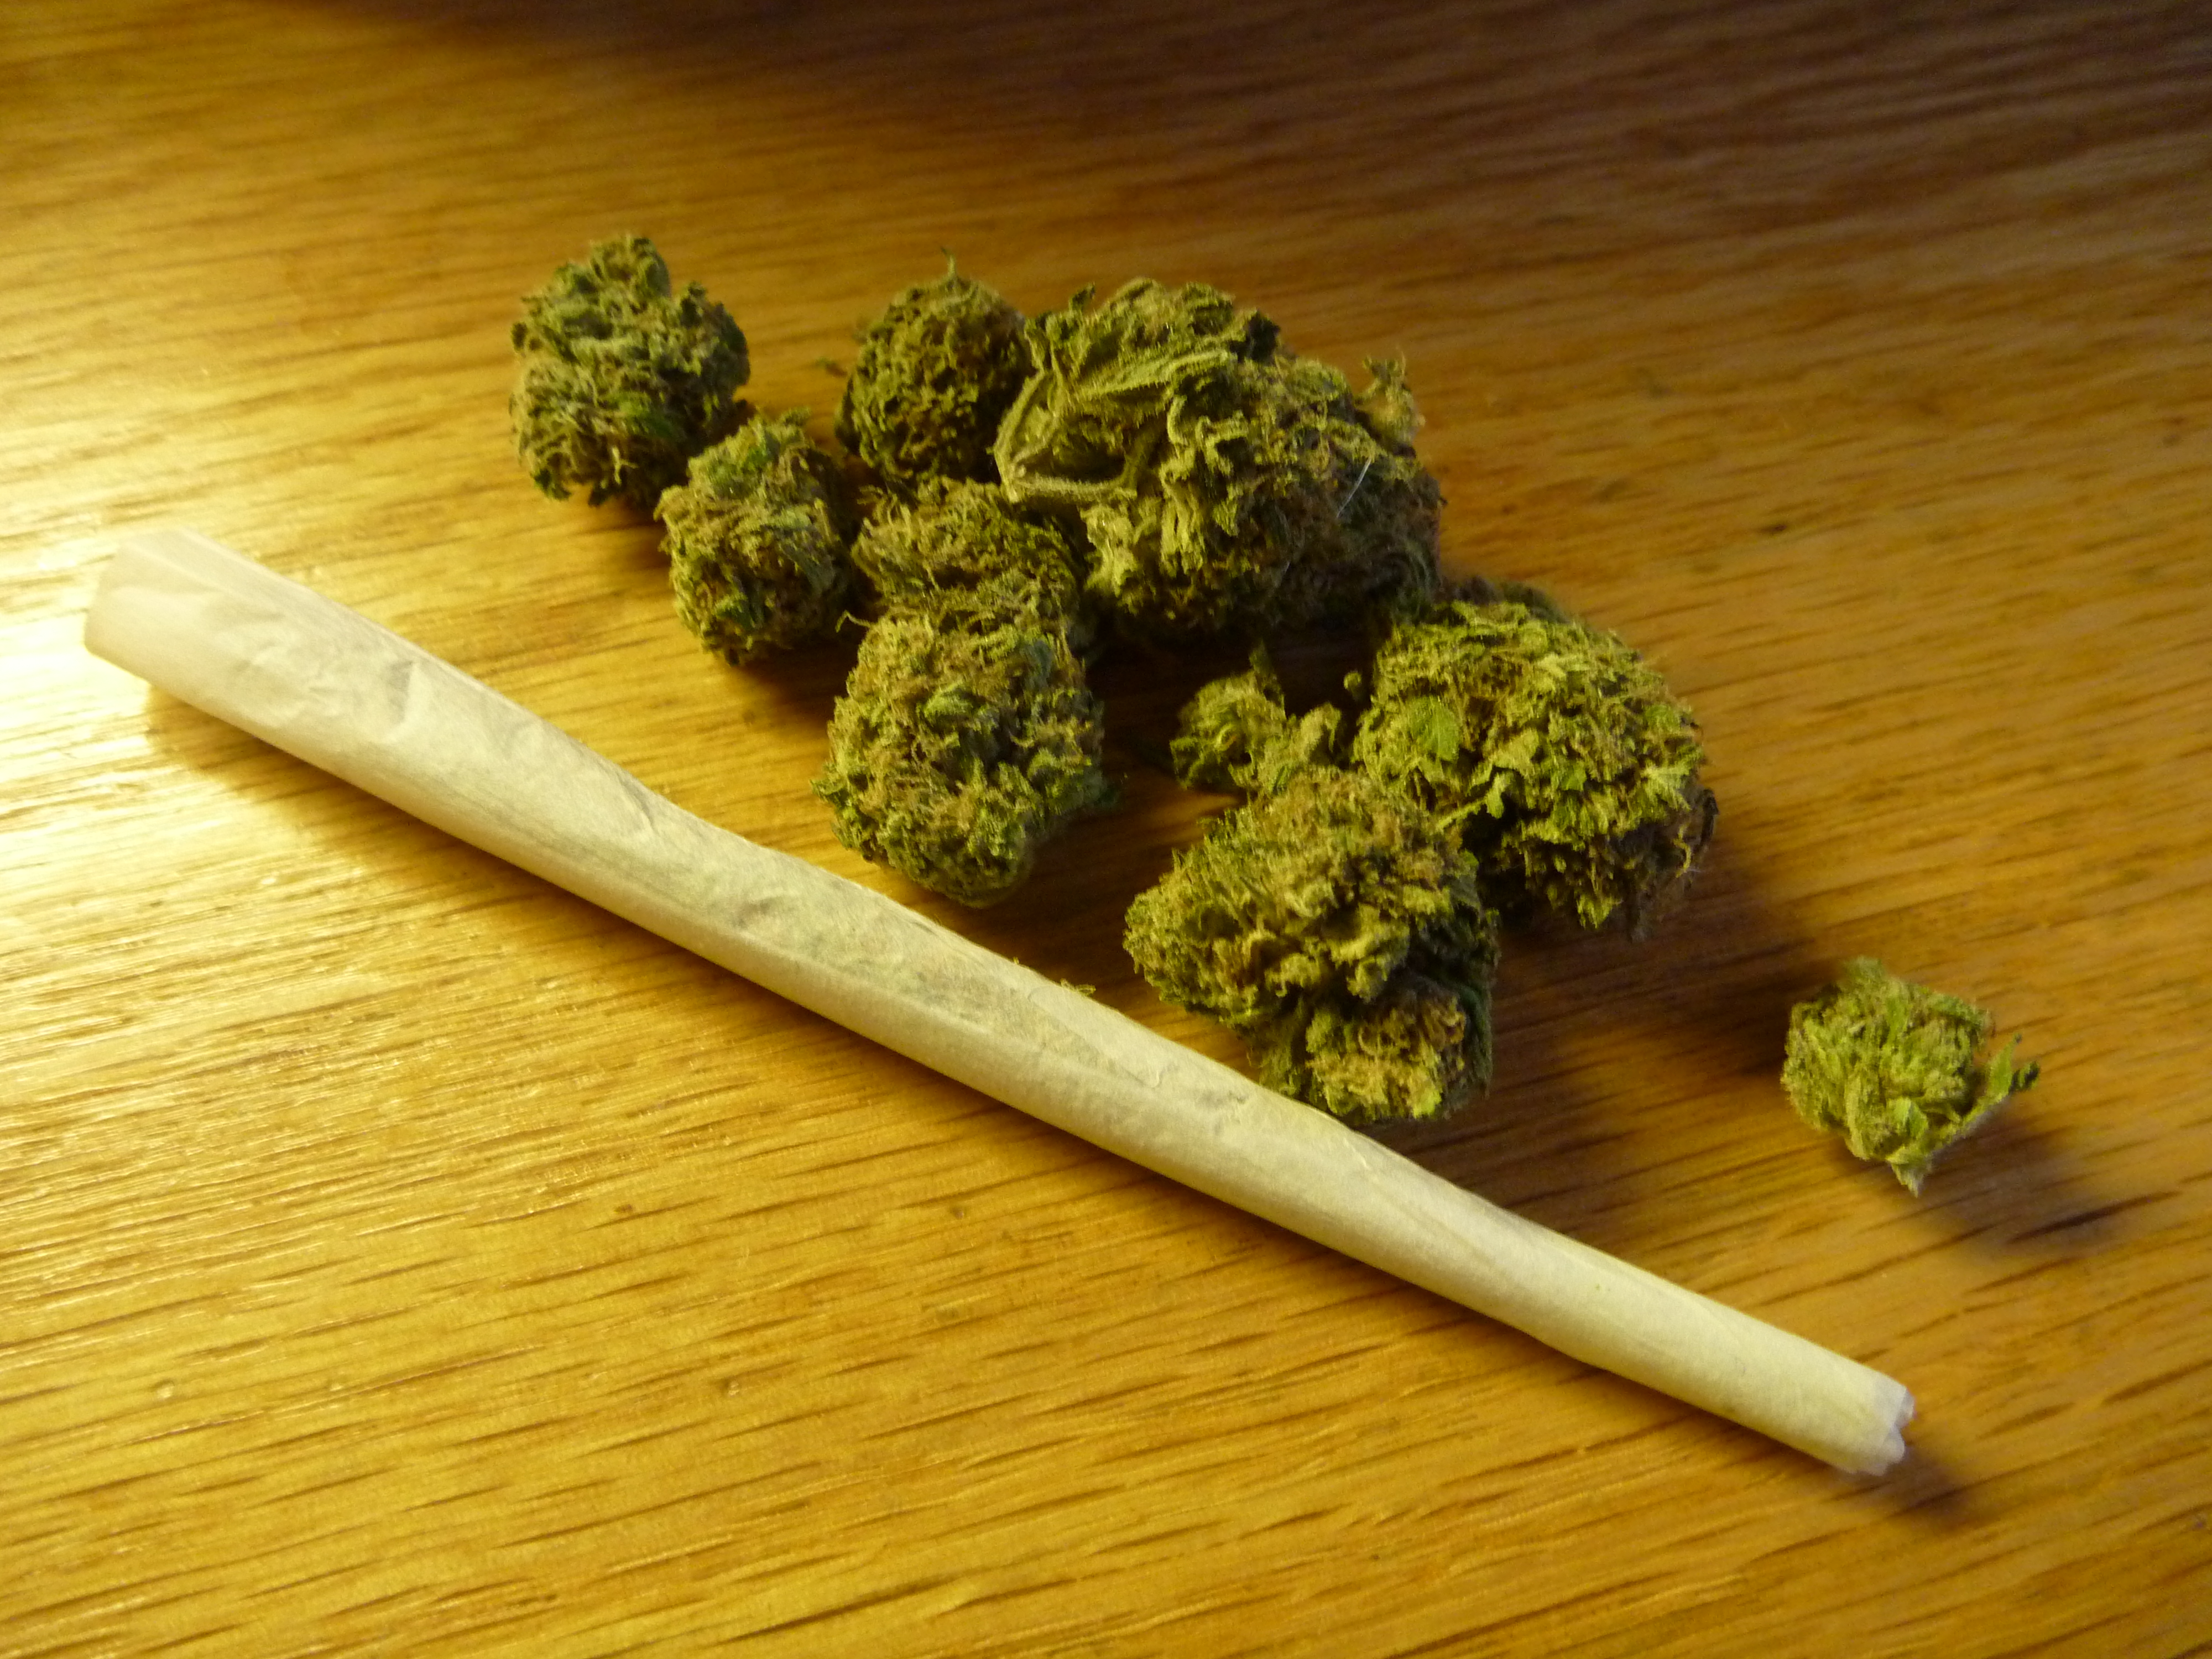 High weed